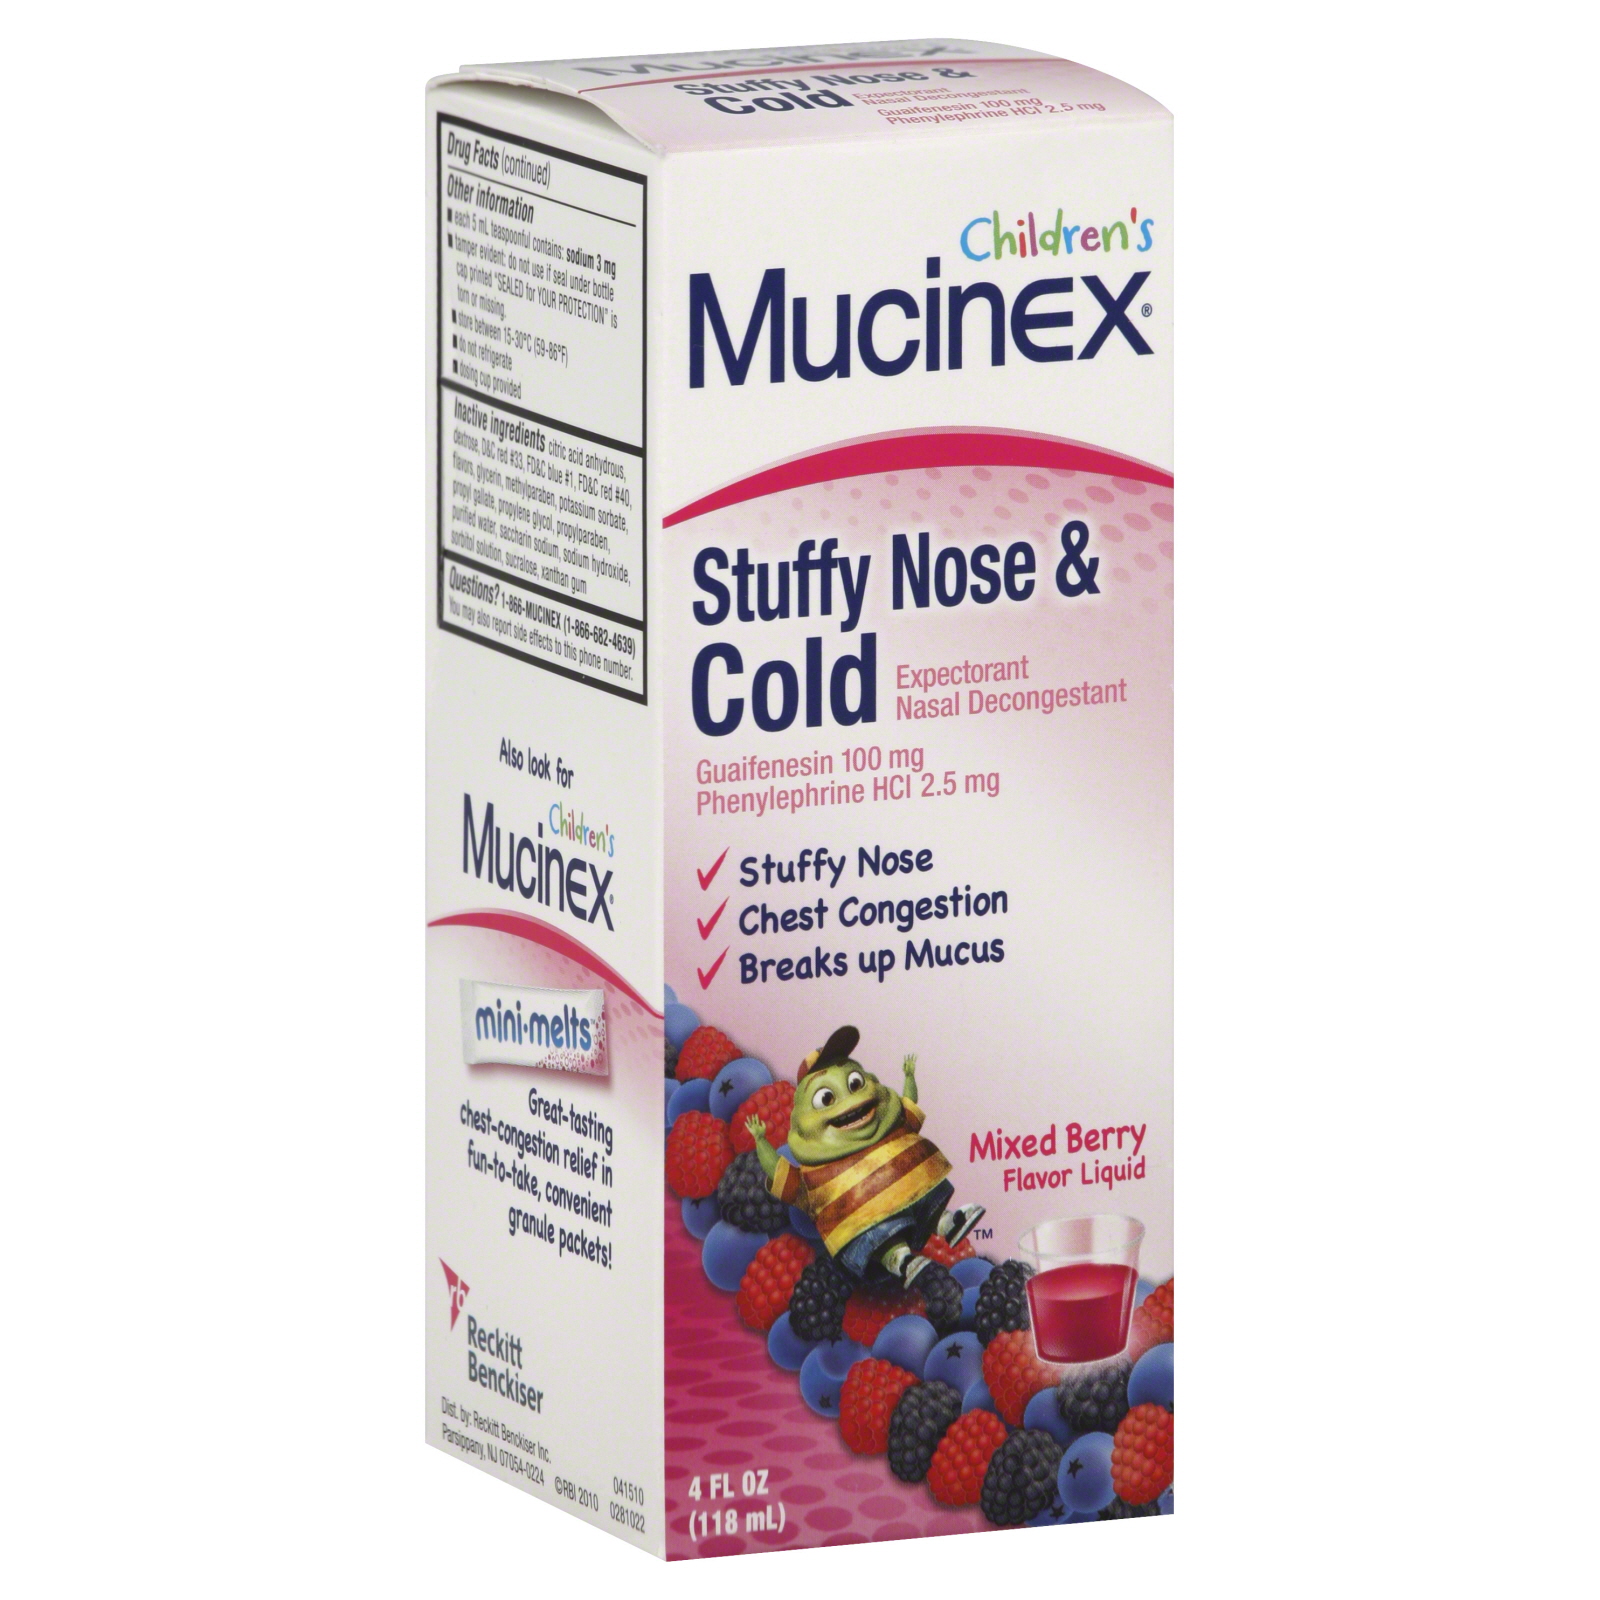 Mucinex For Kids Cold Expectorant/Nasal Decongestant, Mixed Berry Flavor Liquid, 4 fl oz (118 ml)